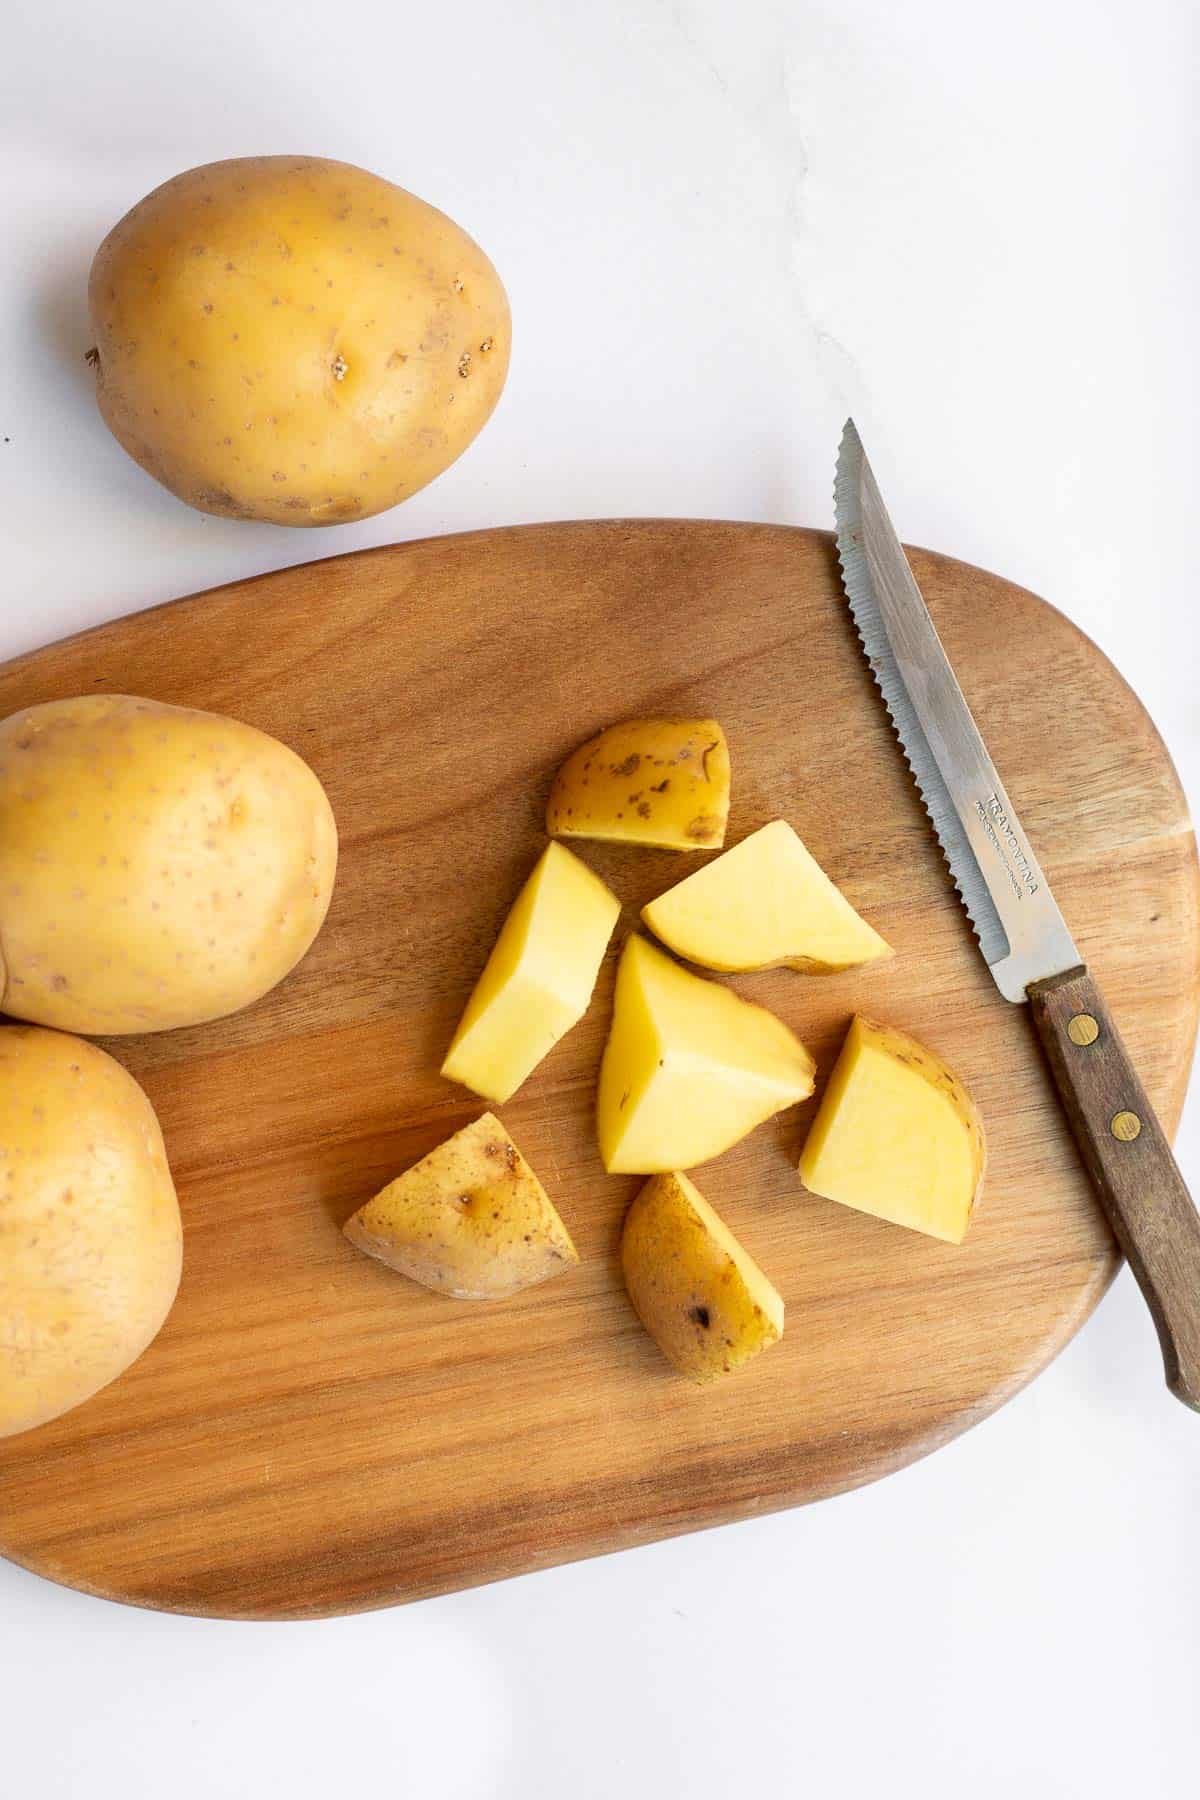 chunks of potato on wooden cutting board.